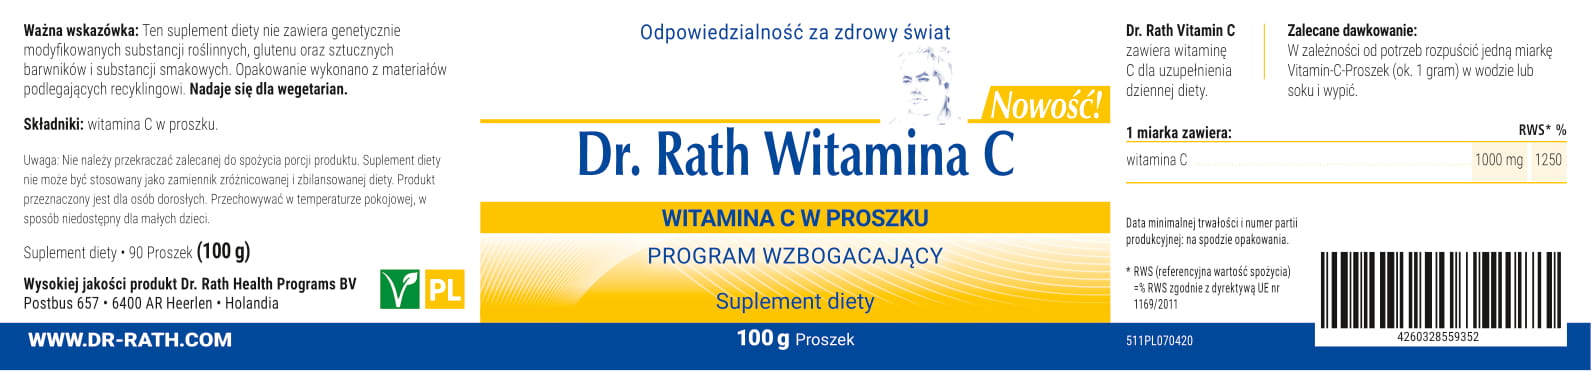 511-PL---Dr--Rath-Vitamin-C-Powder---Etykieta-produktu-1.jpg